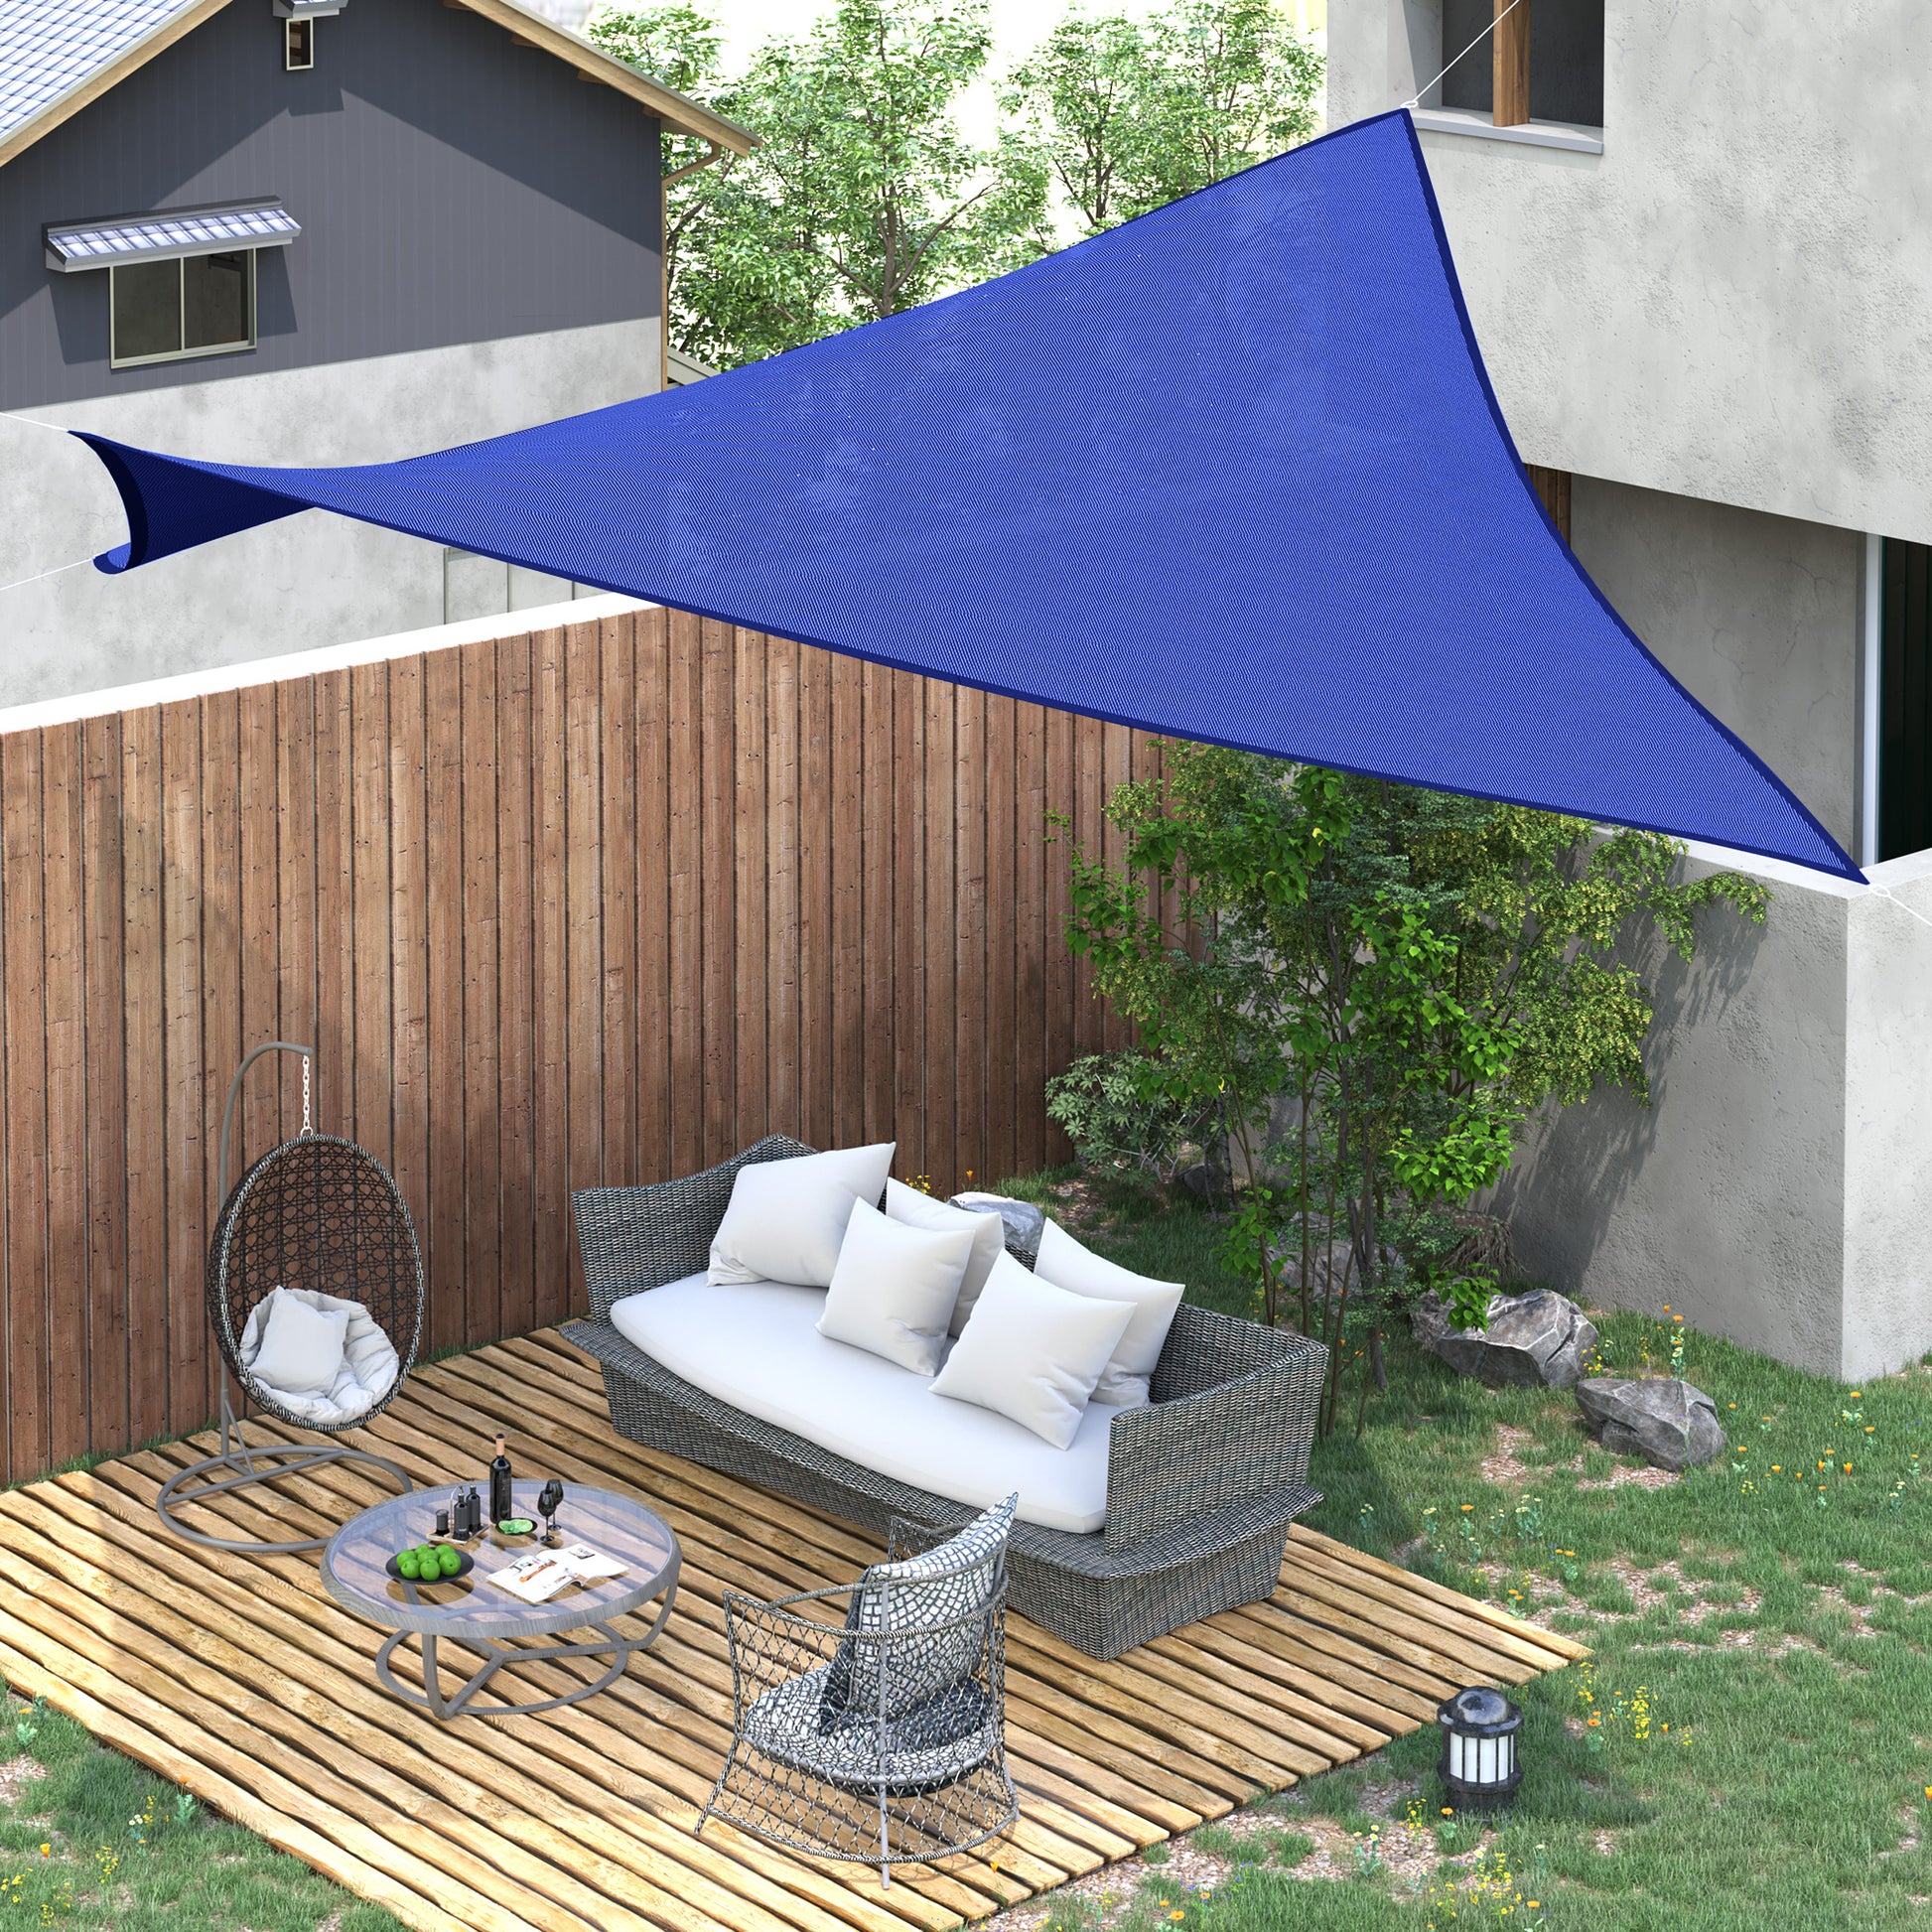 Rectangle 20'x 16' Sun Shade Sail Top Cover Fabric Outdoor Shelter Backyard Window Garden Carrying Bag Blue at Gallery Canada